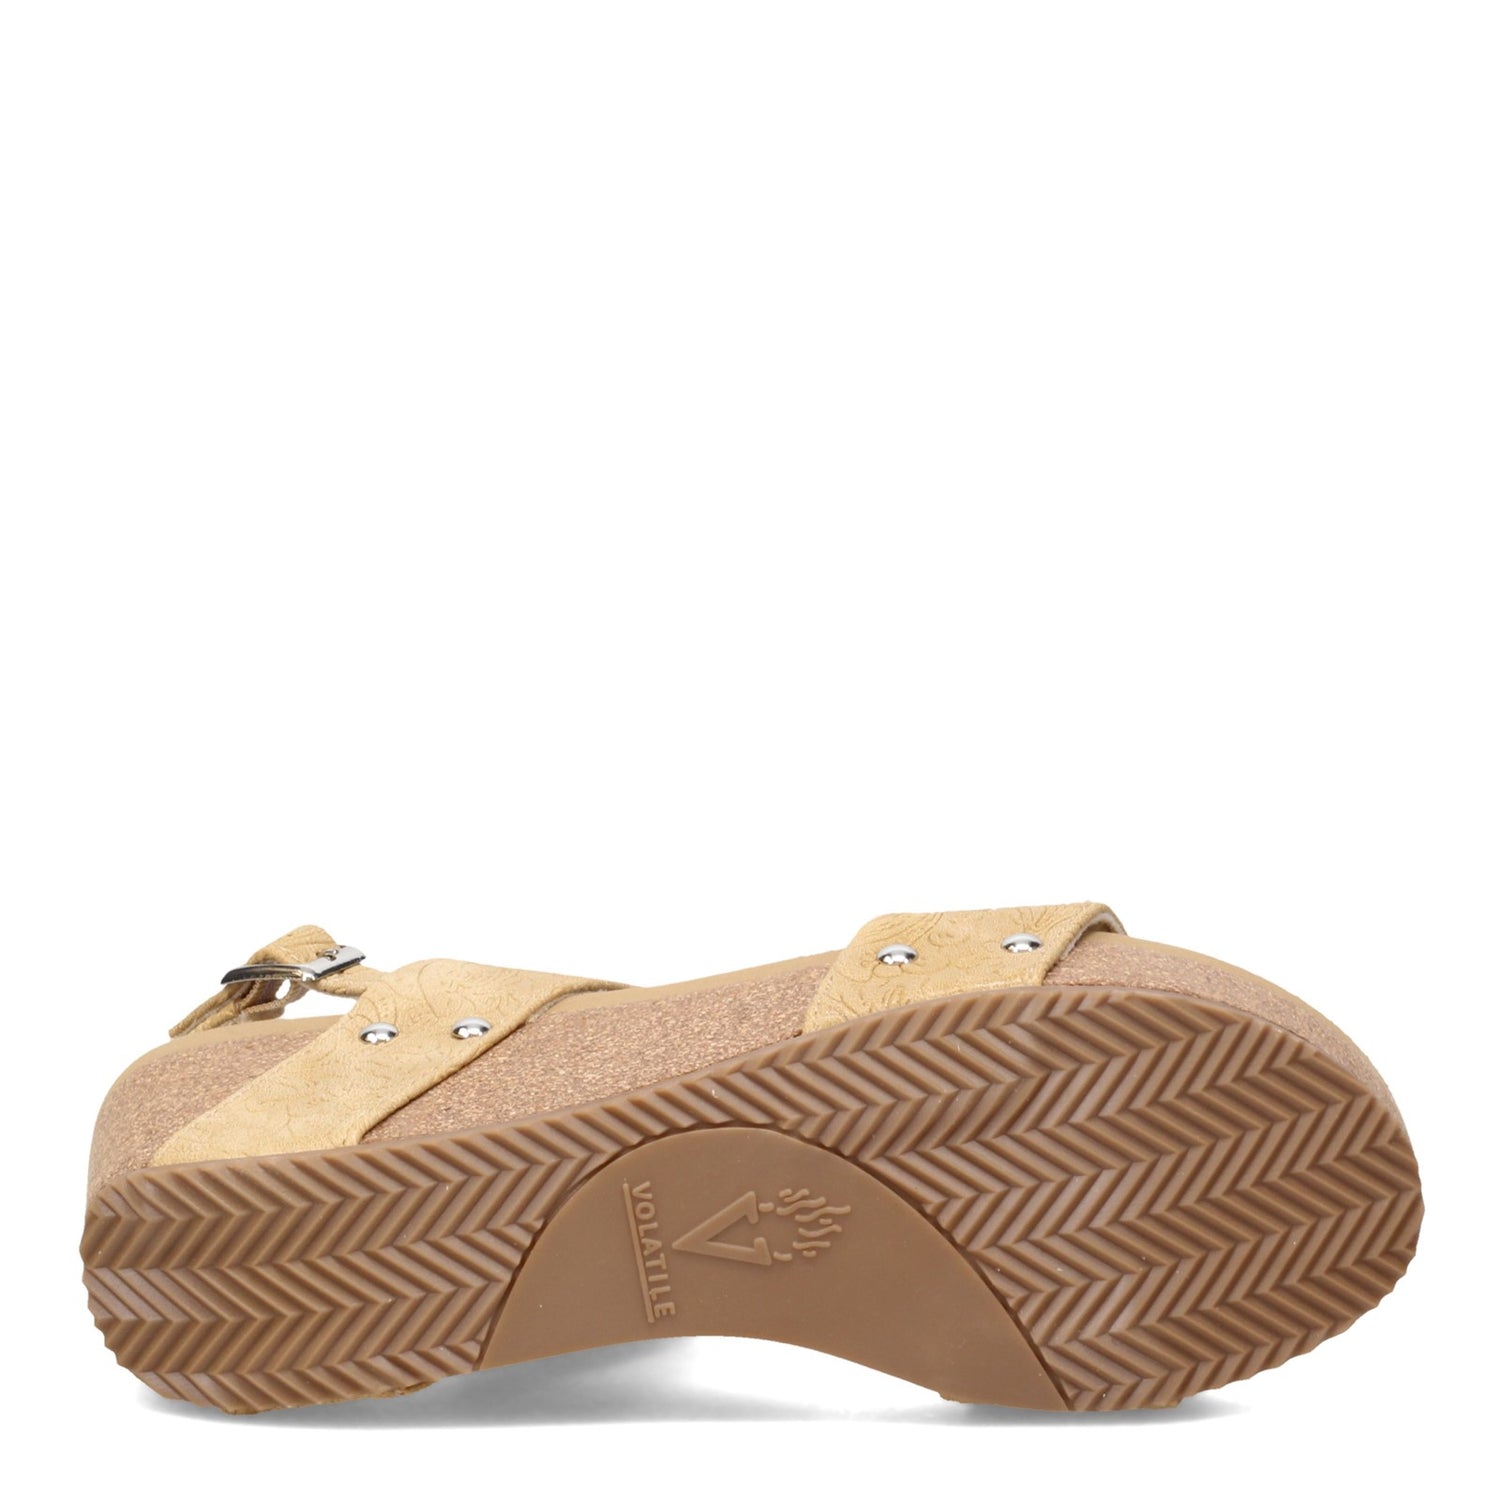 Peltz Shoes  Women's Volatile Summerlove Sandal BEIGE PV119-BEIGE